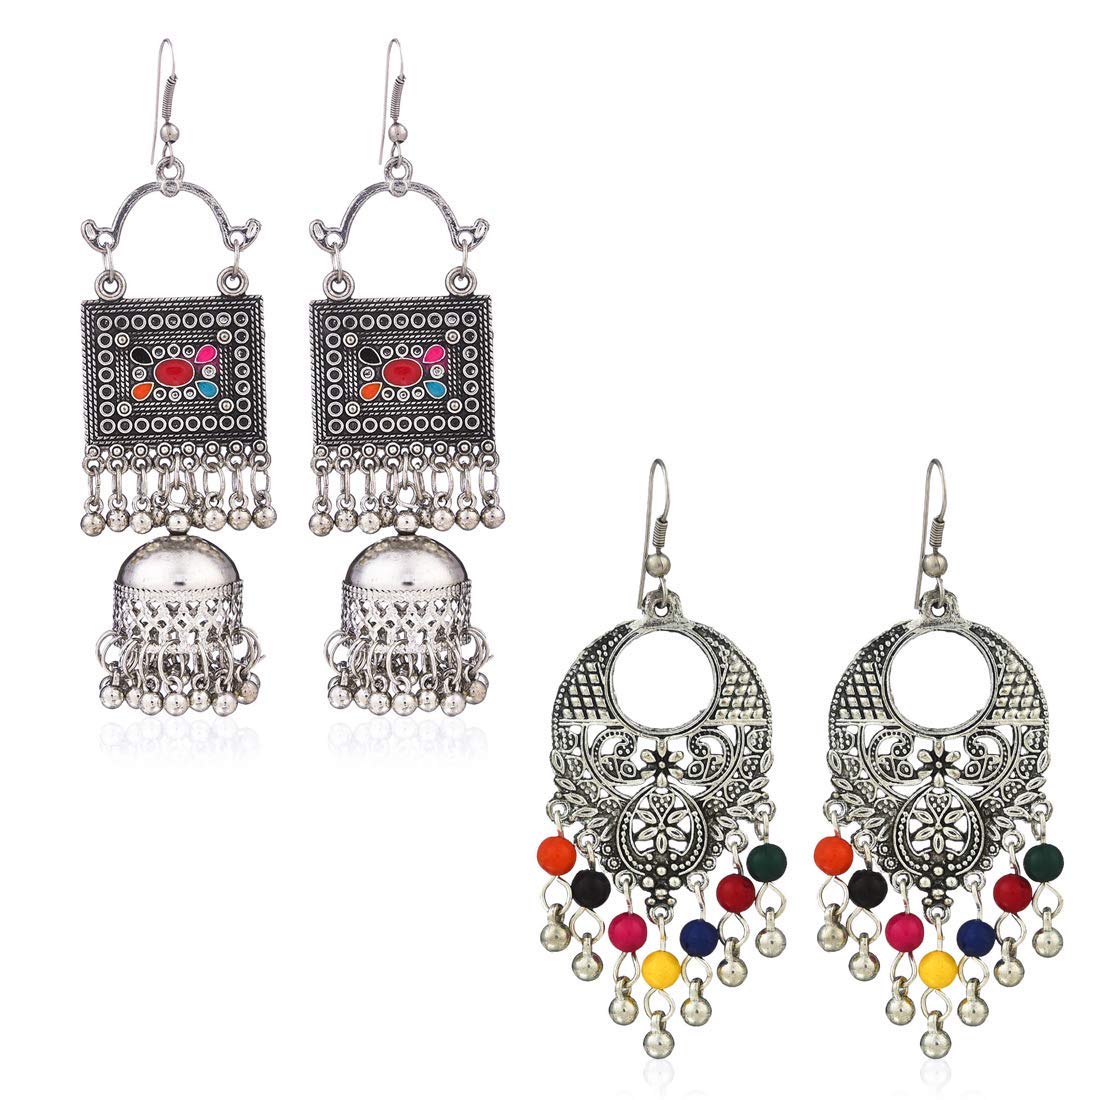 Kairangi Oxidised Earrings for Women Oxidized Silver Combo of 2 Pairs Chandbali Traditional Jhumka Earrings for Women and Girls